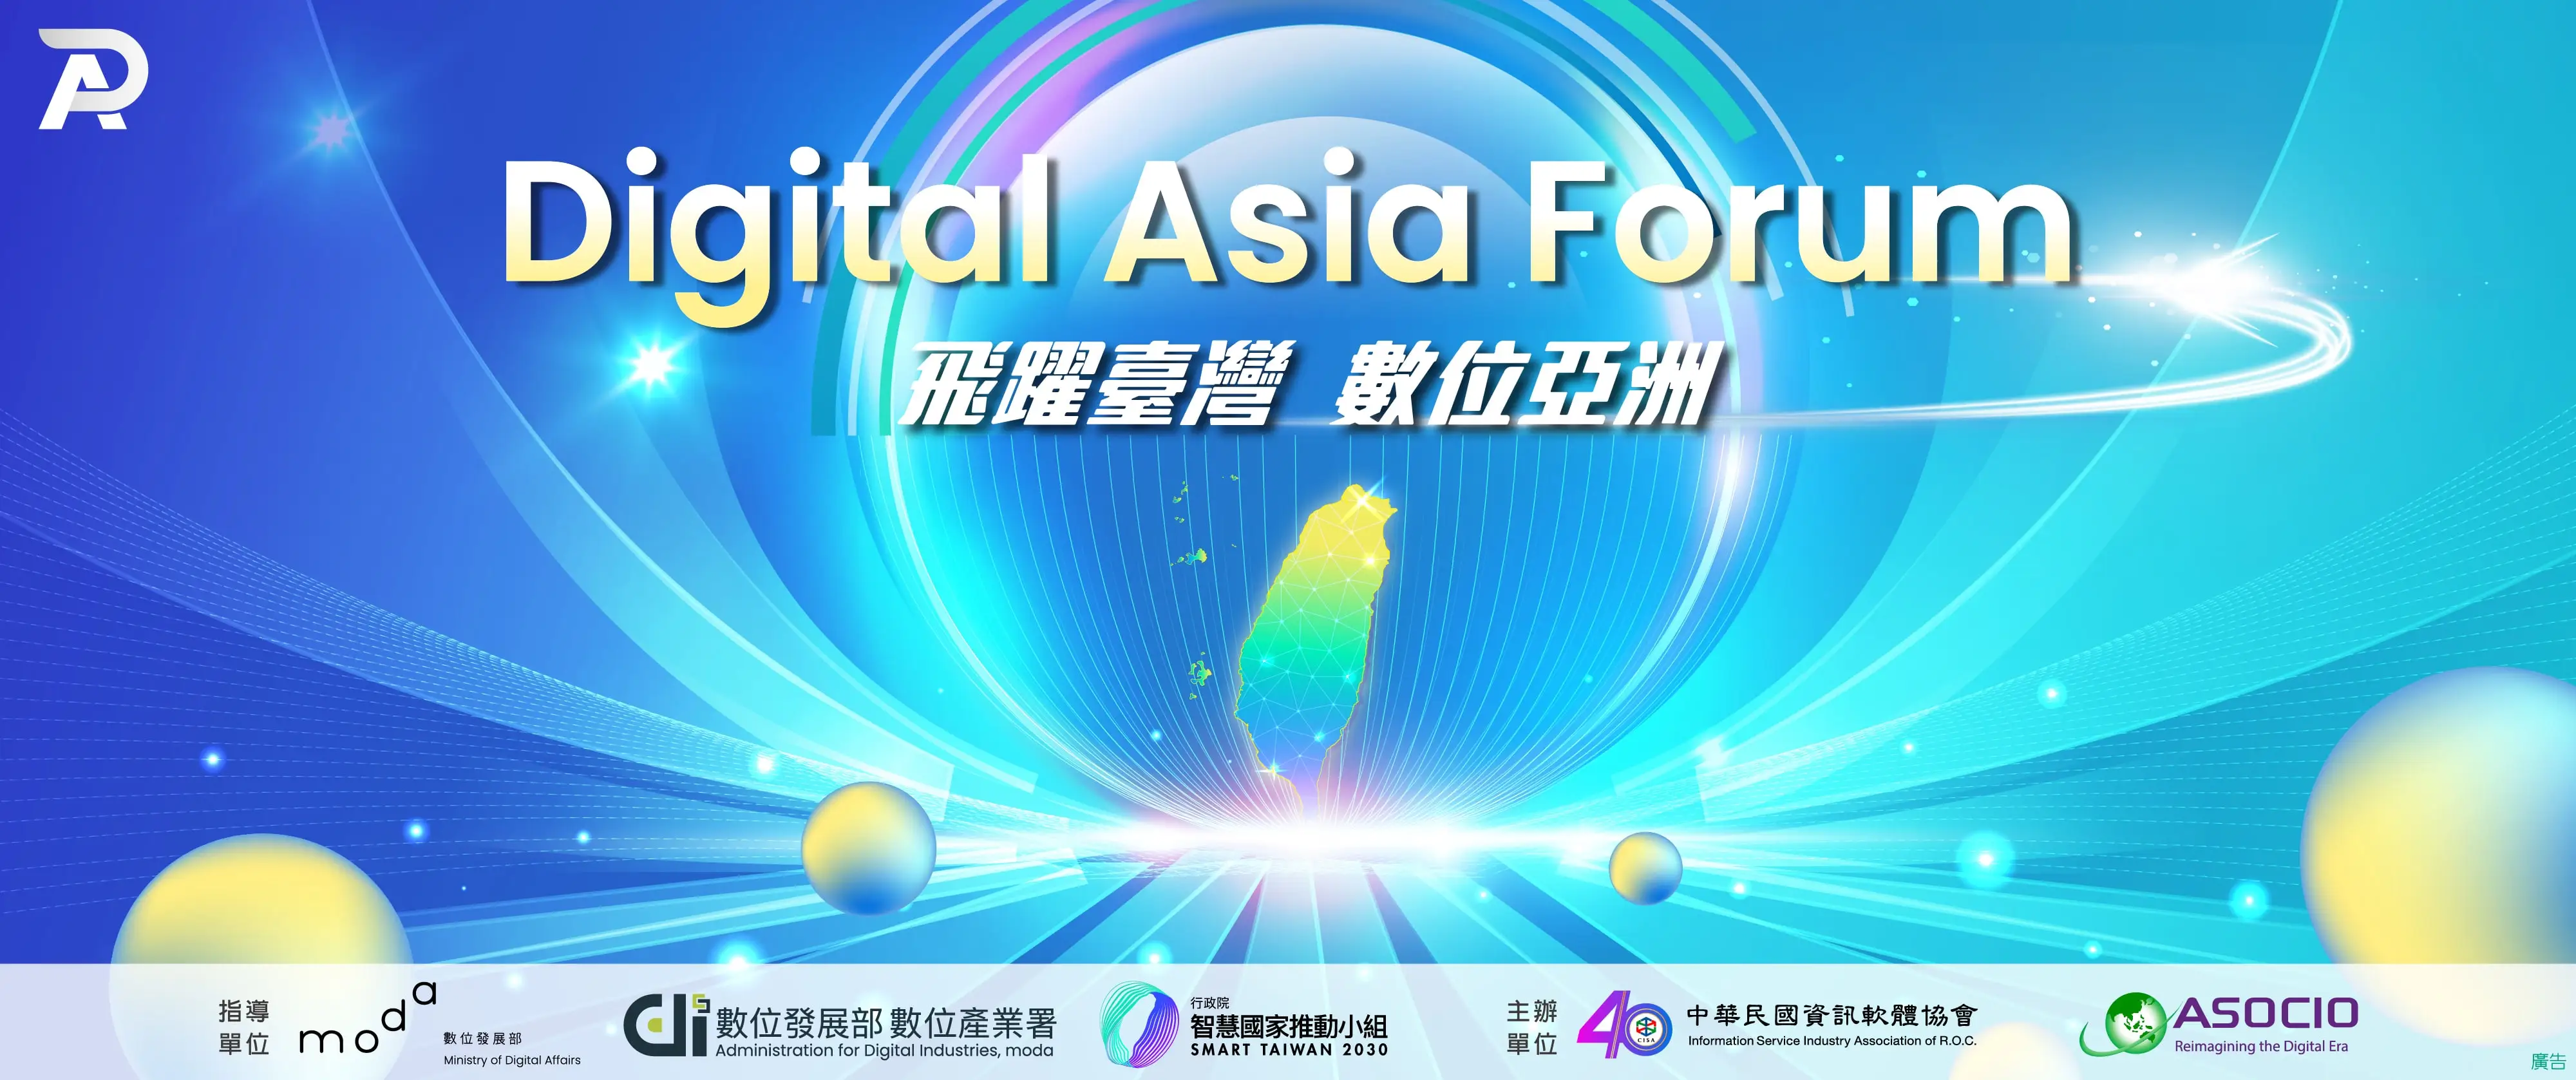 Digital Asia Forum國際論壇